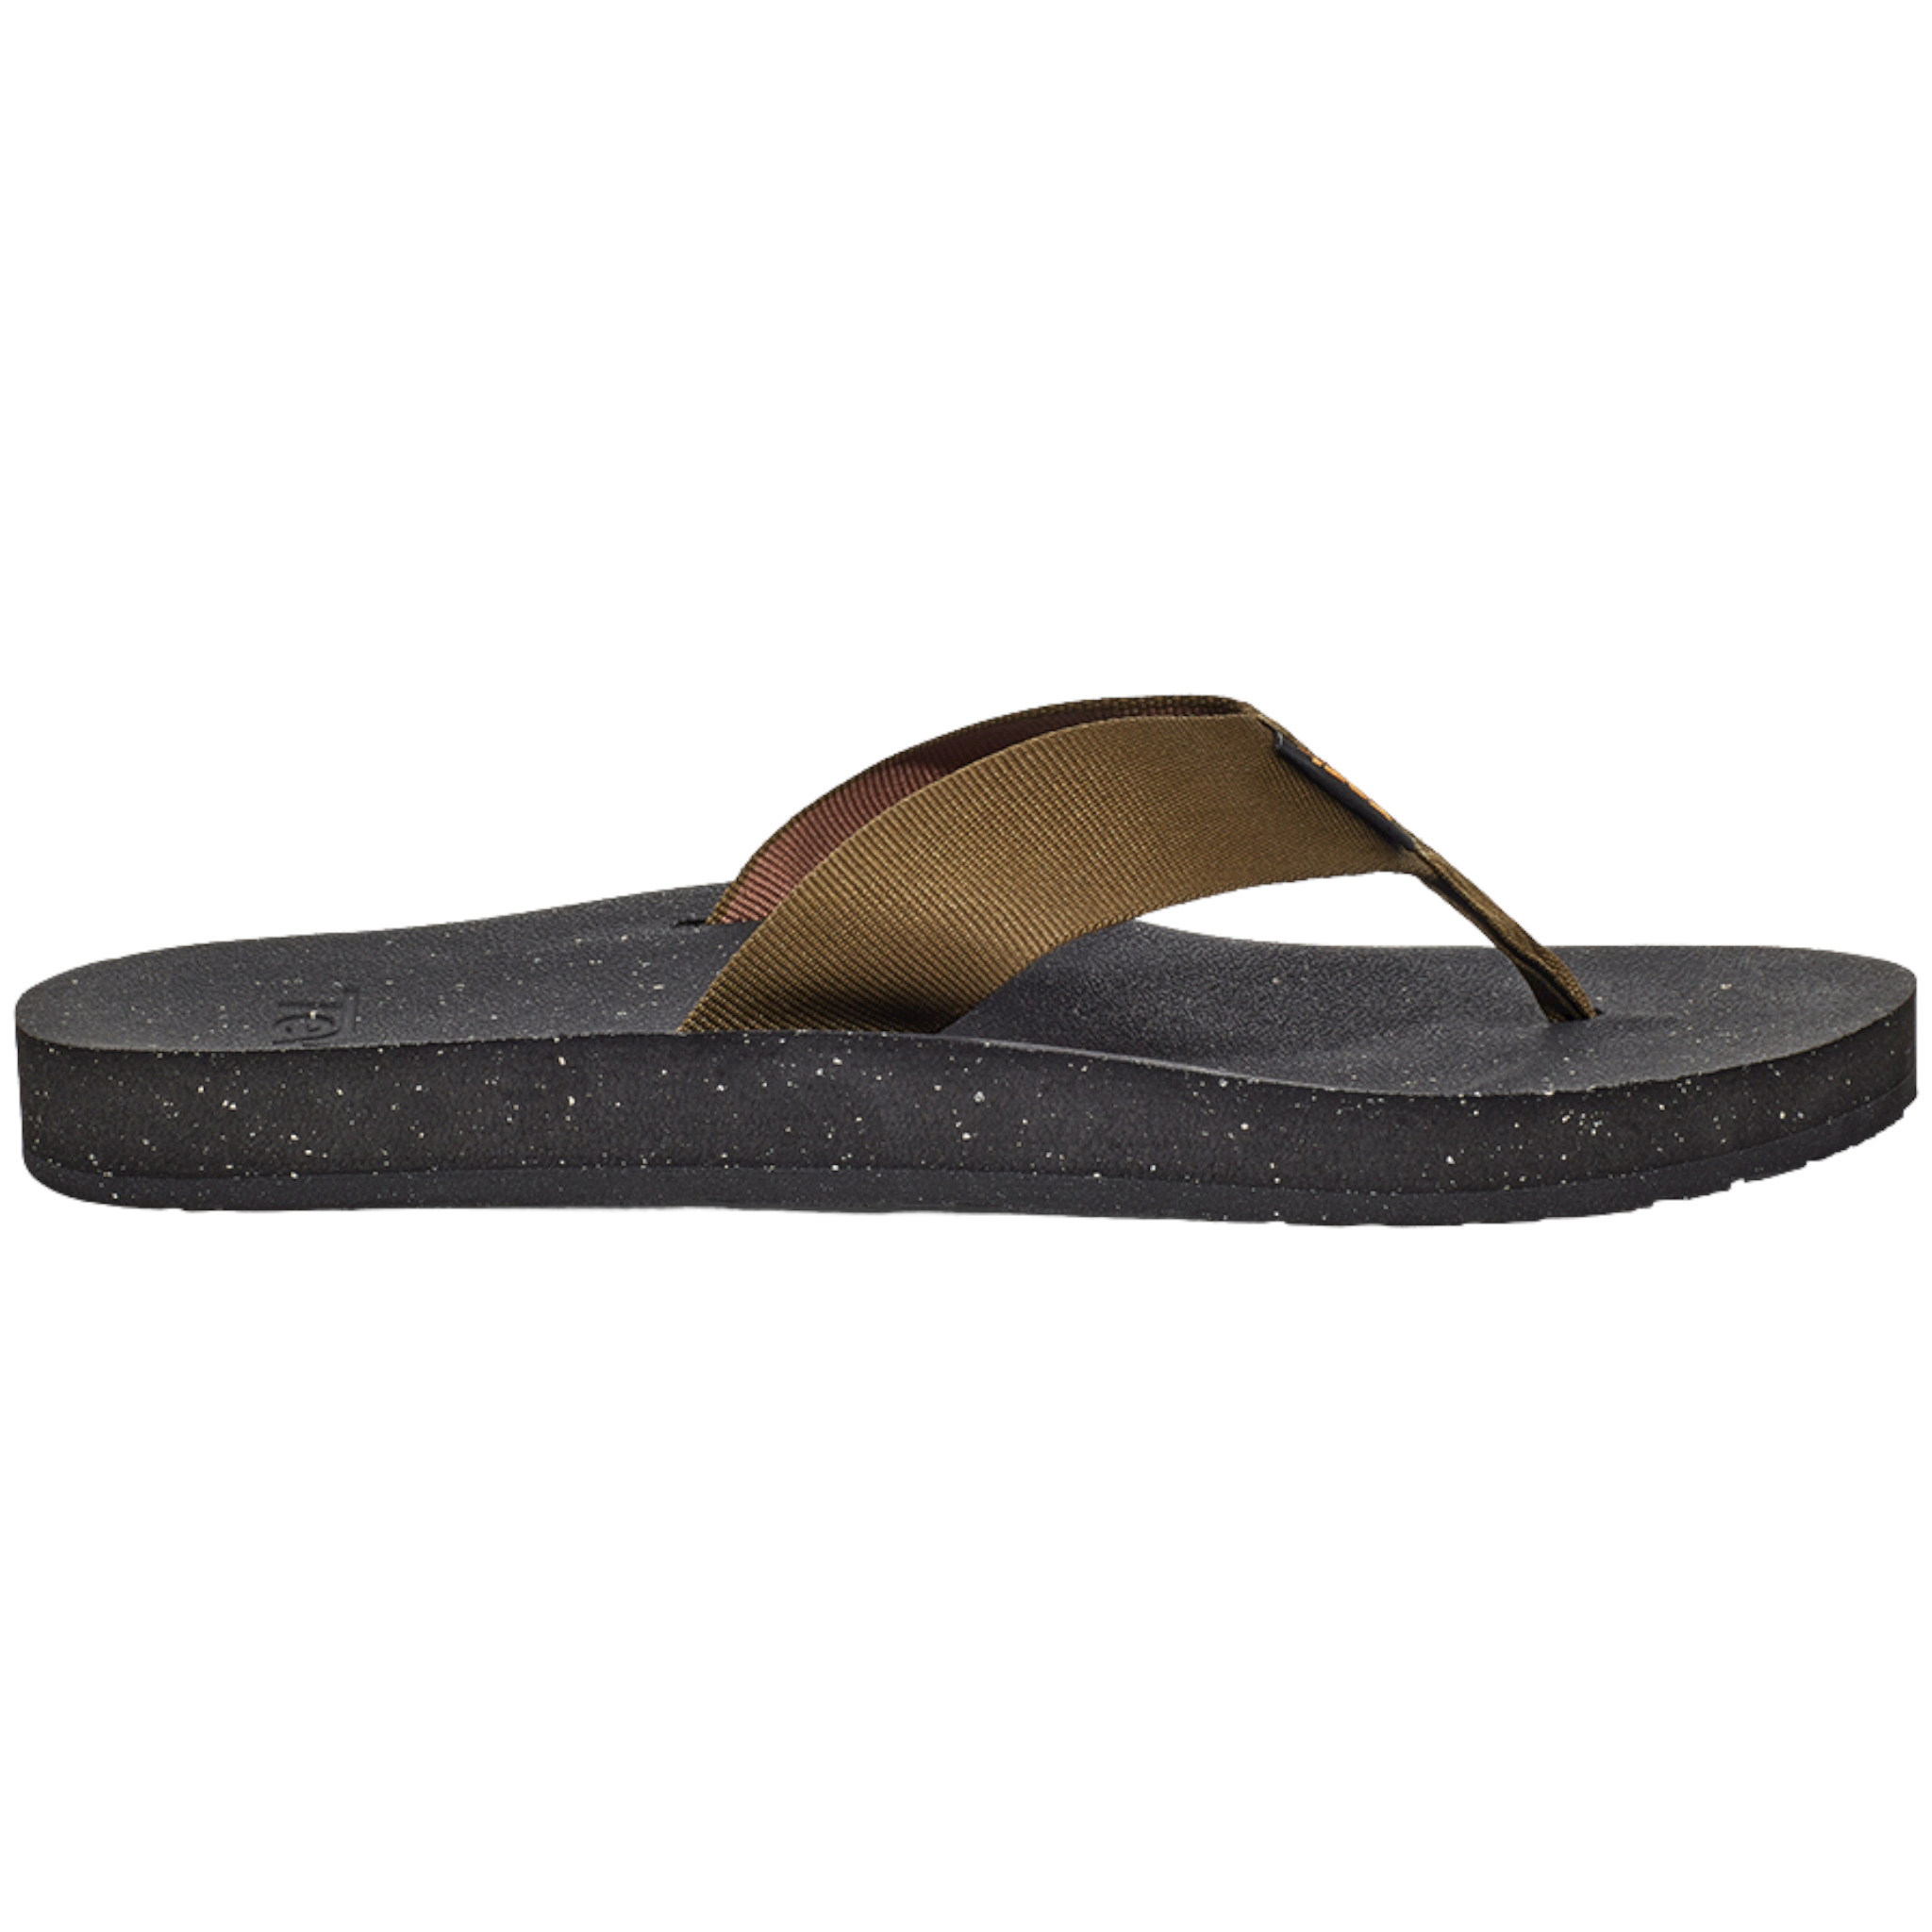 M Reflip - shoe&me - Teva - Jandal - Eco Collection, Jandals, Mens, Summer 22